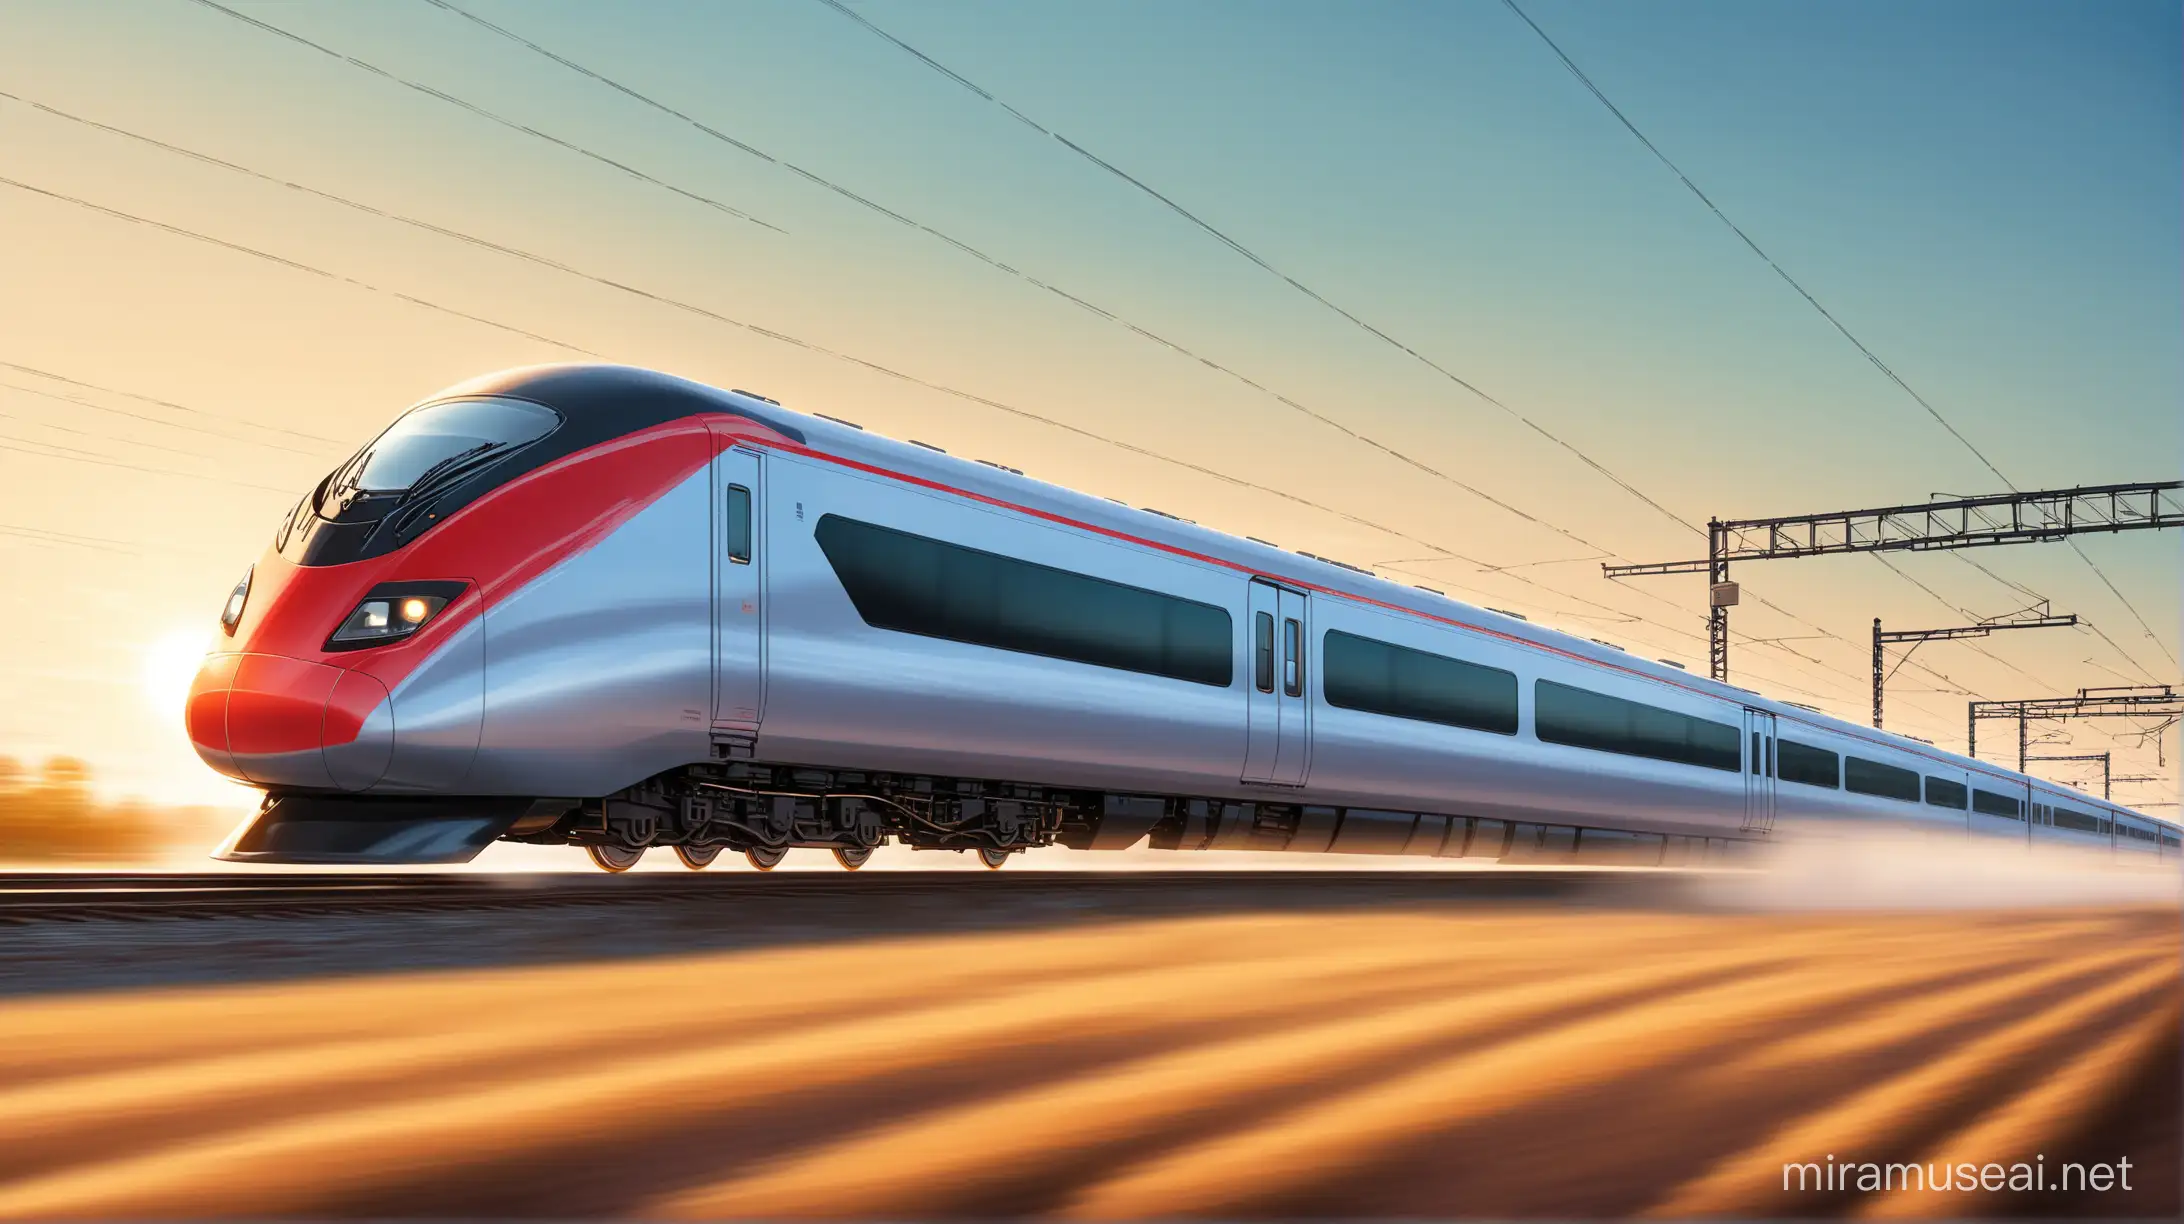 Speeding Bullet Train Racing Across Urban Landscape